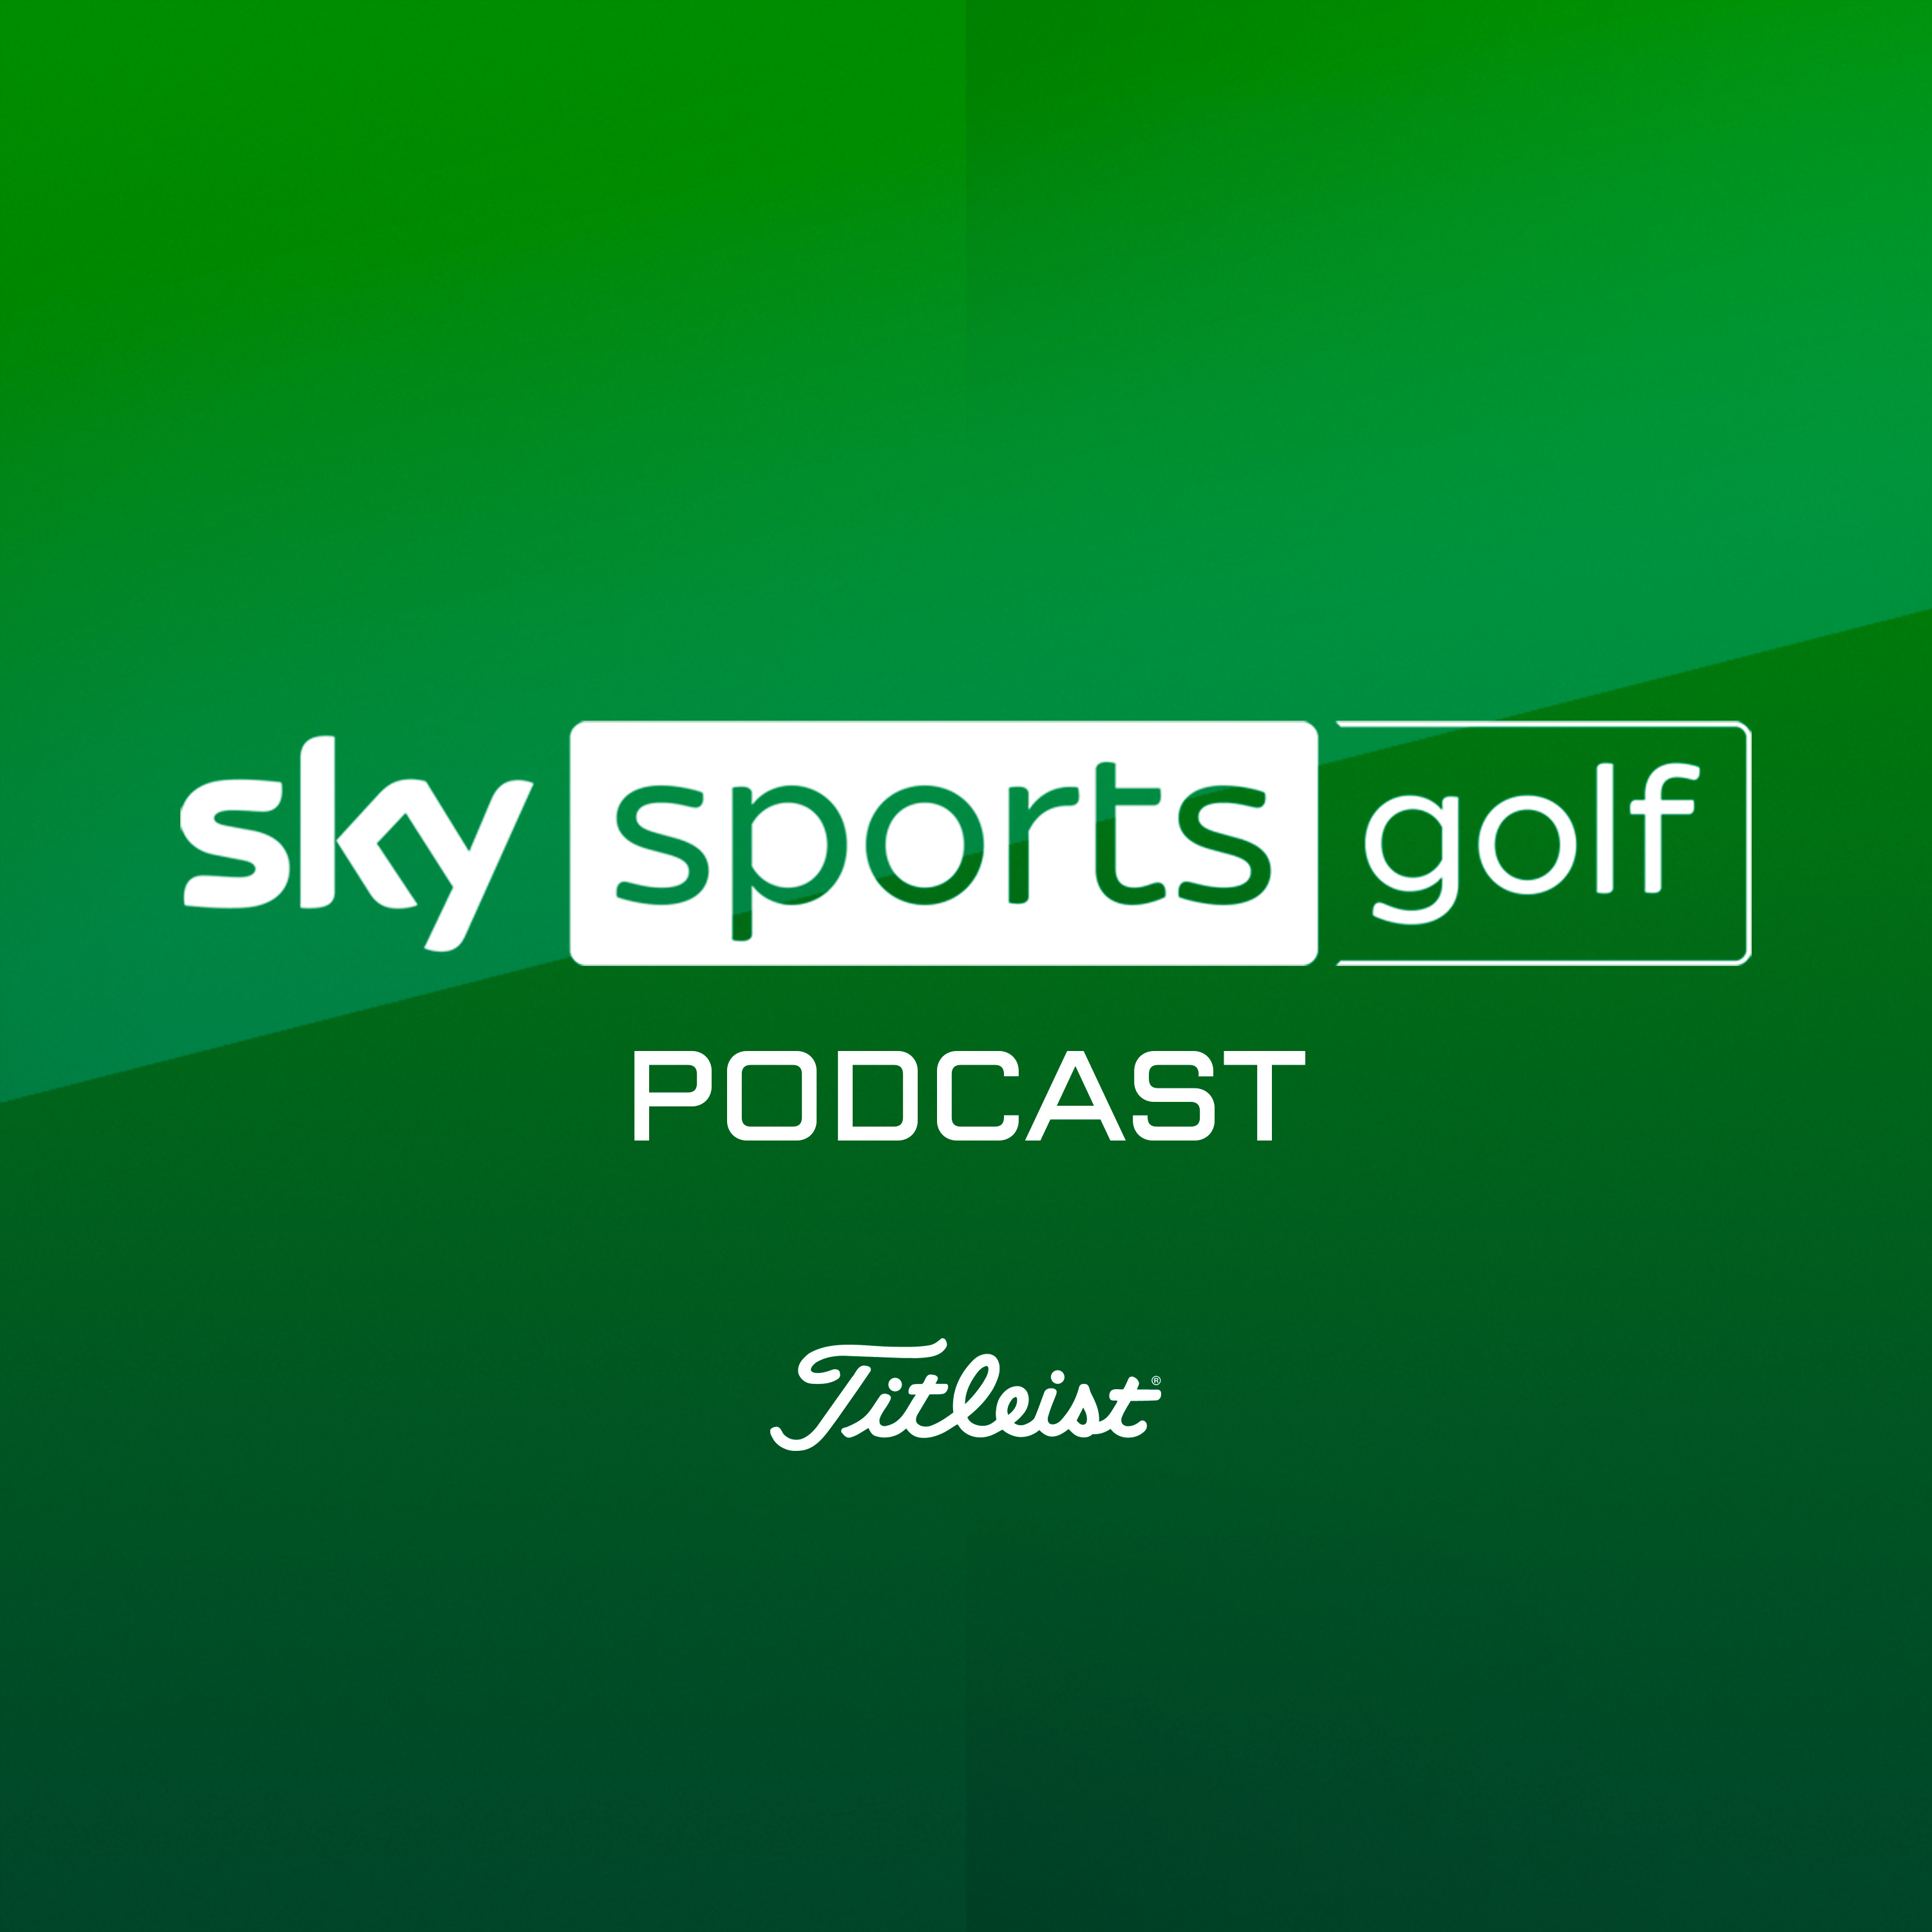 Sky Sports Golf Podcast image